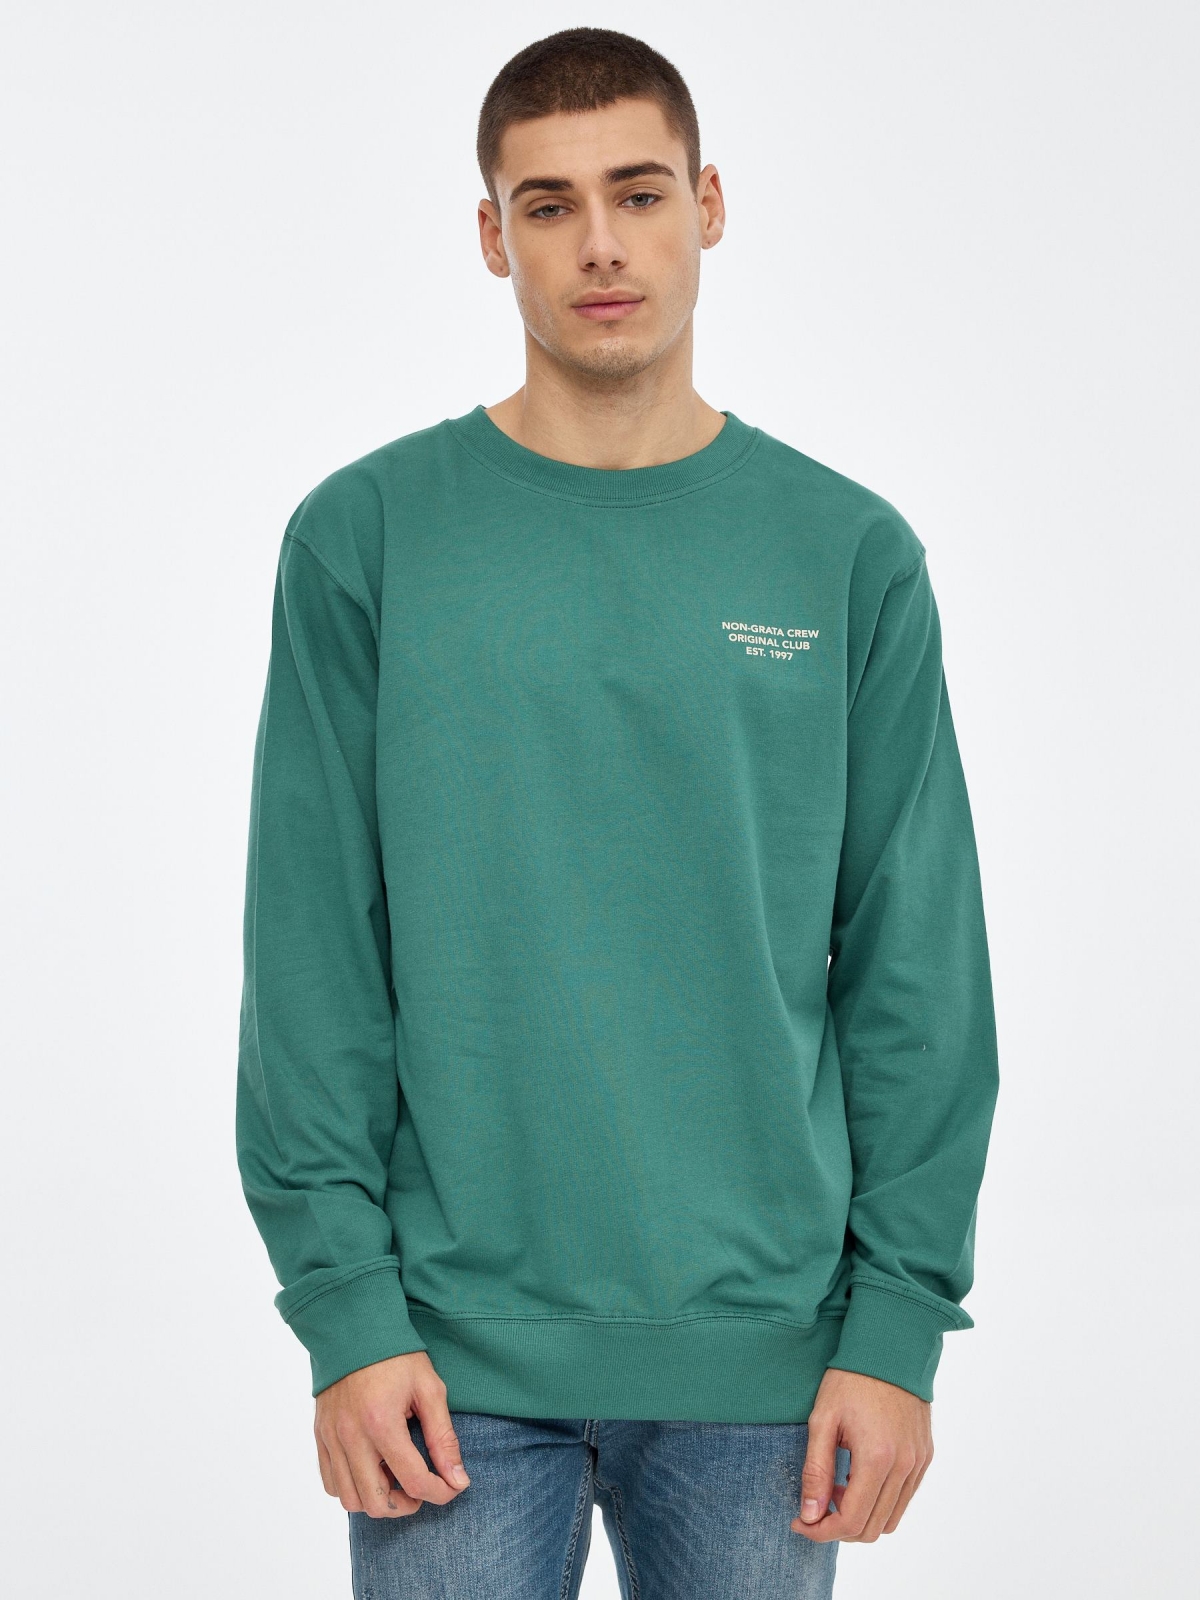 Original Club Sweatshirt emerald middle front view